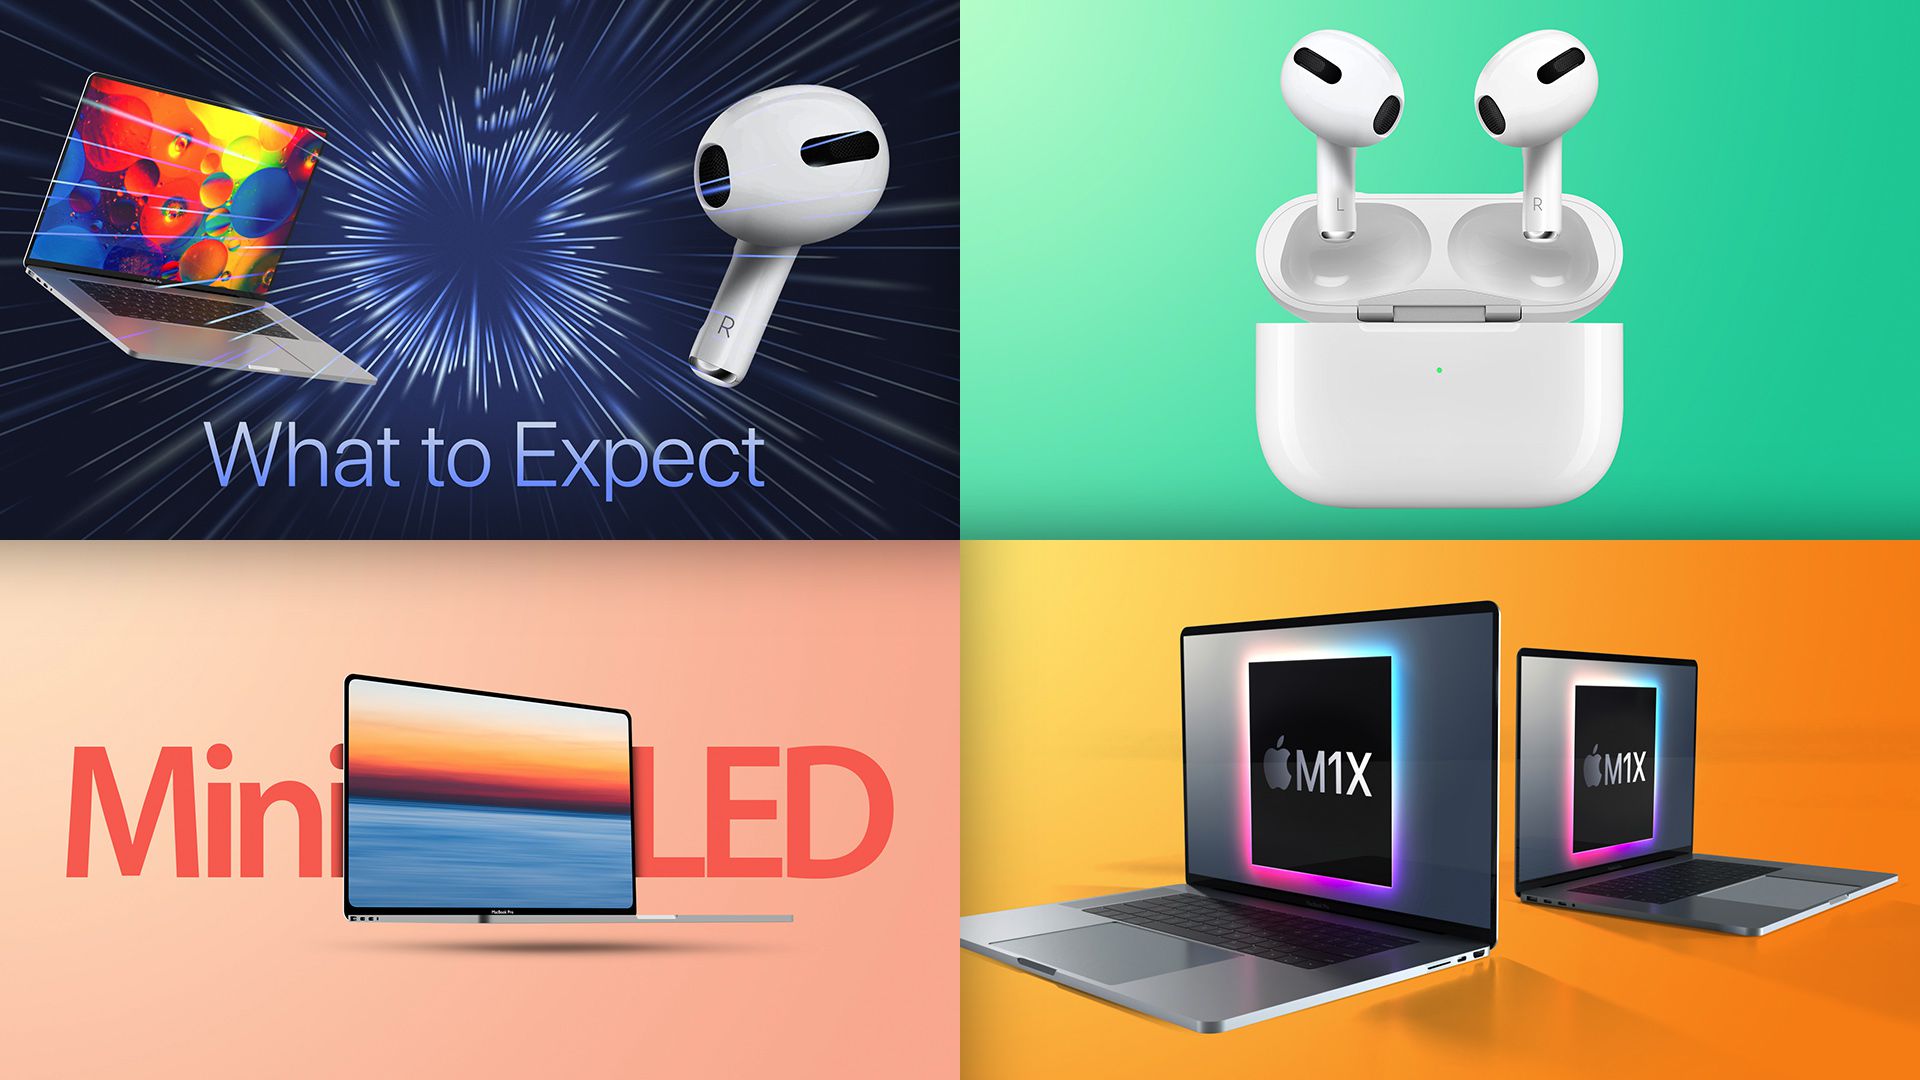 Top Stories: Apple Event Announced, M1X MacBook Pro Rumors, Apple Watch Series 7..